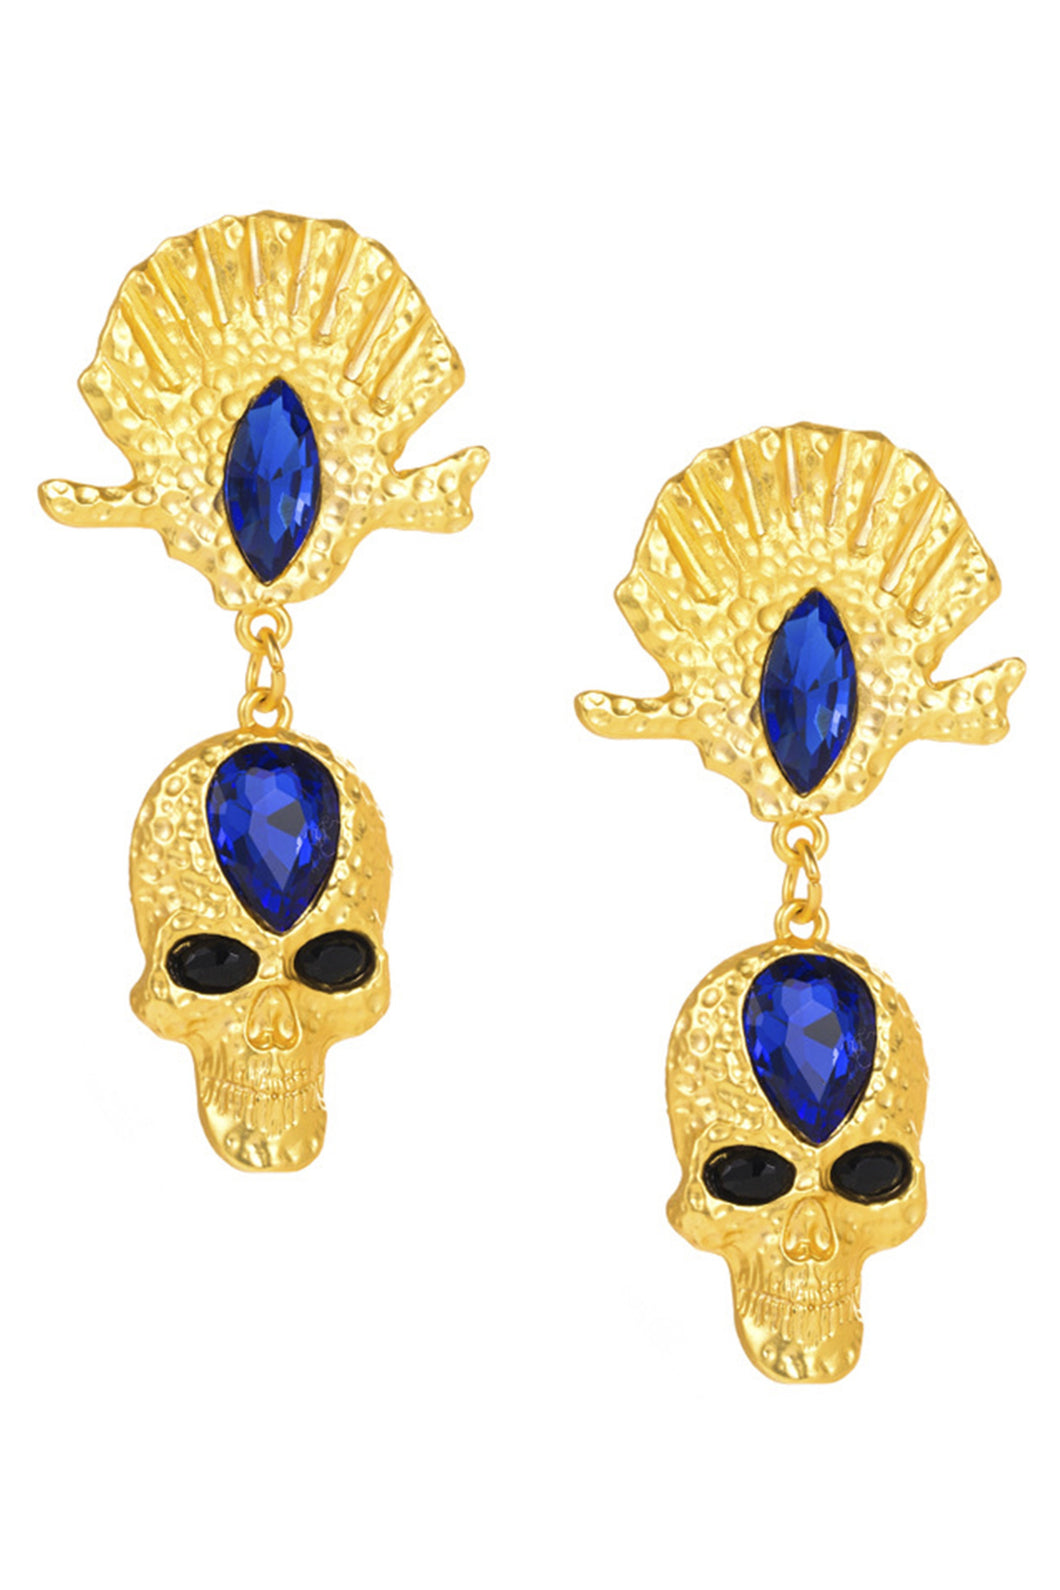 Blue Skull Rhinestone Alloy Earrings